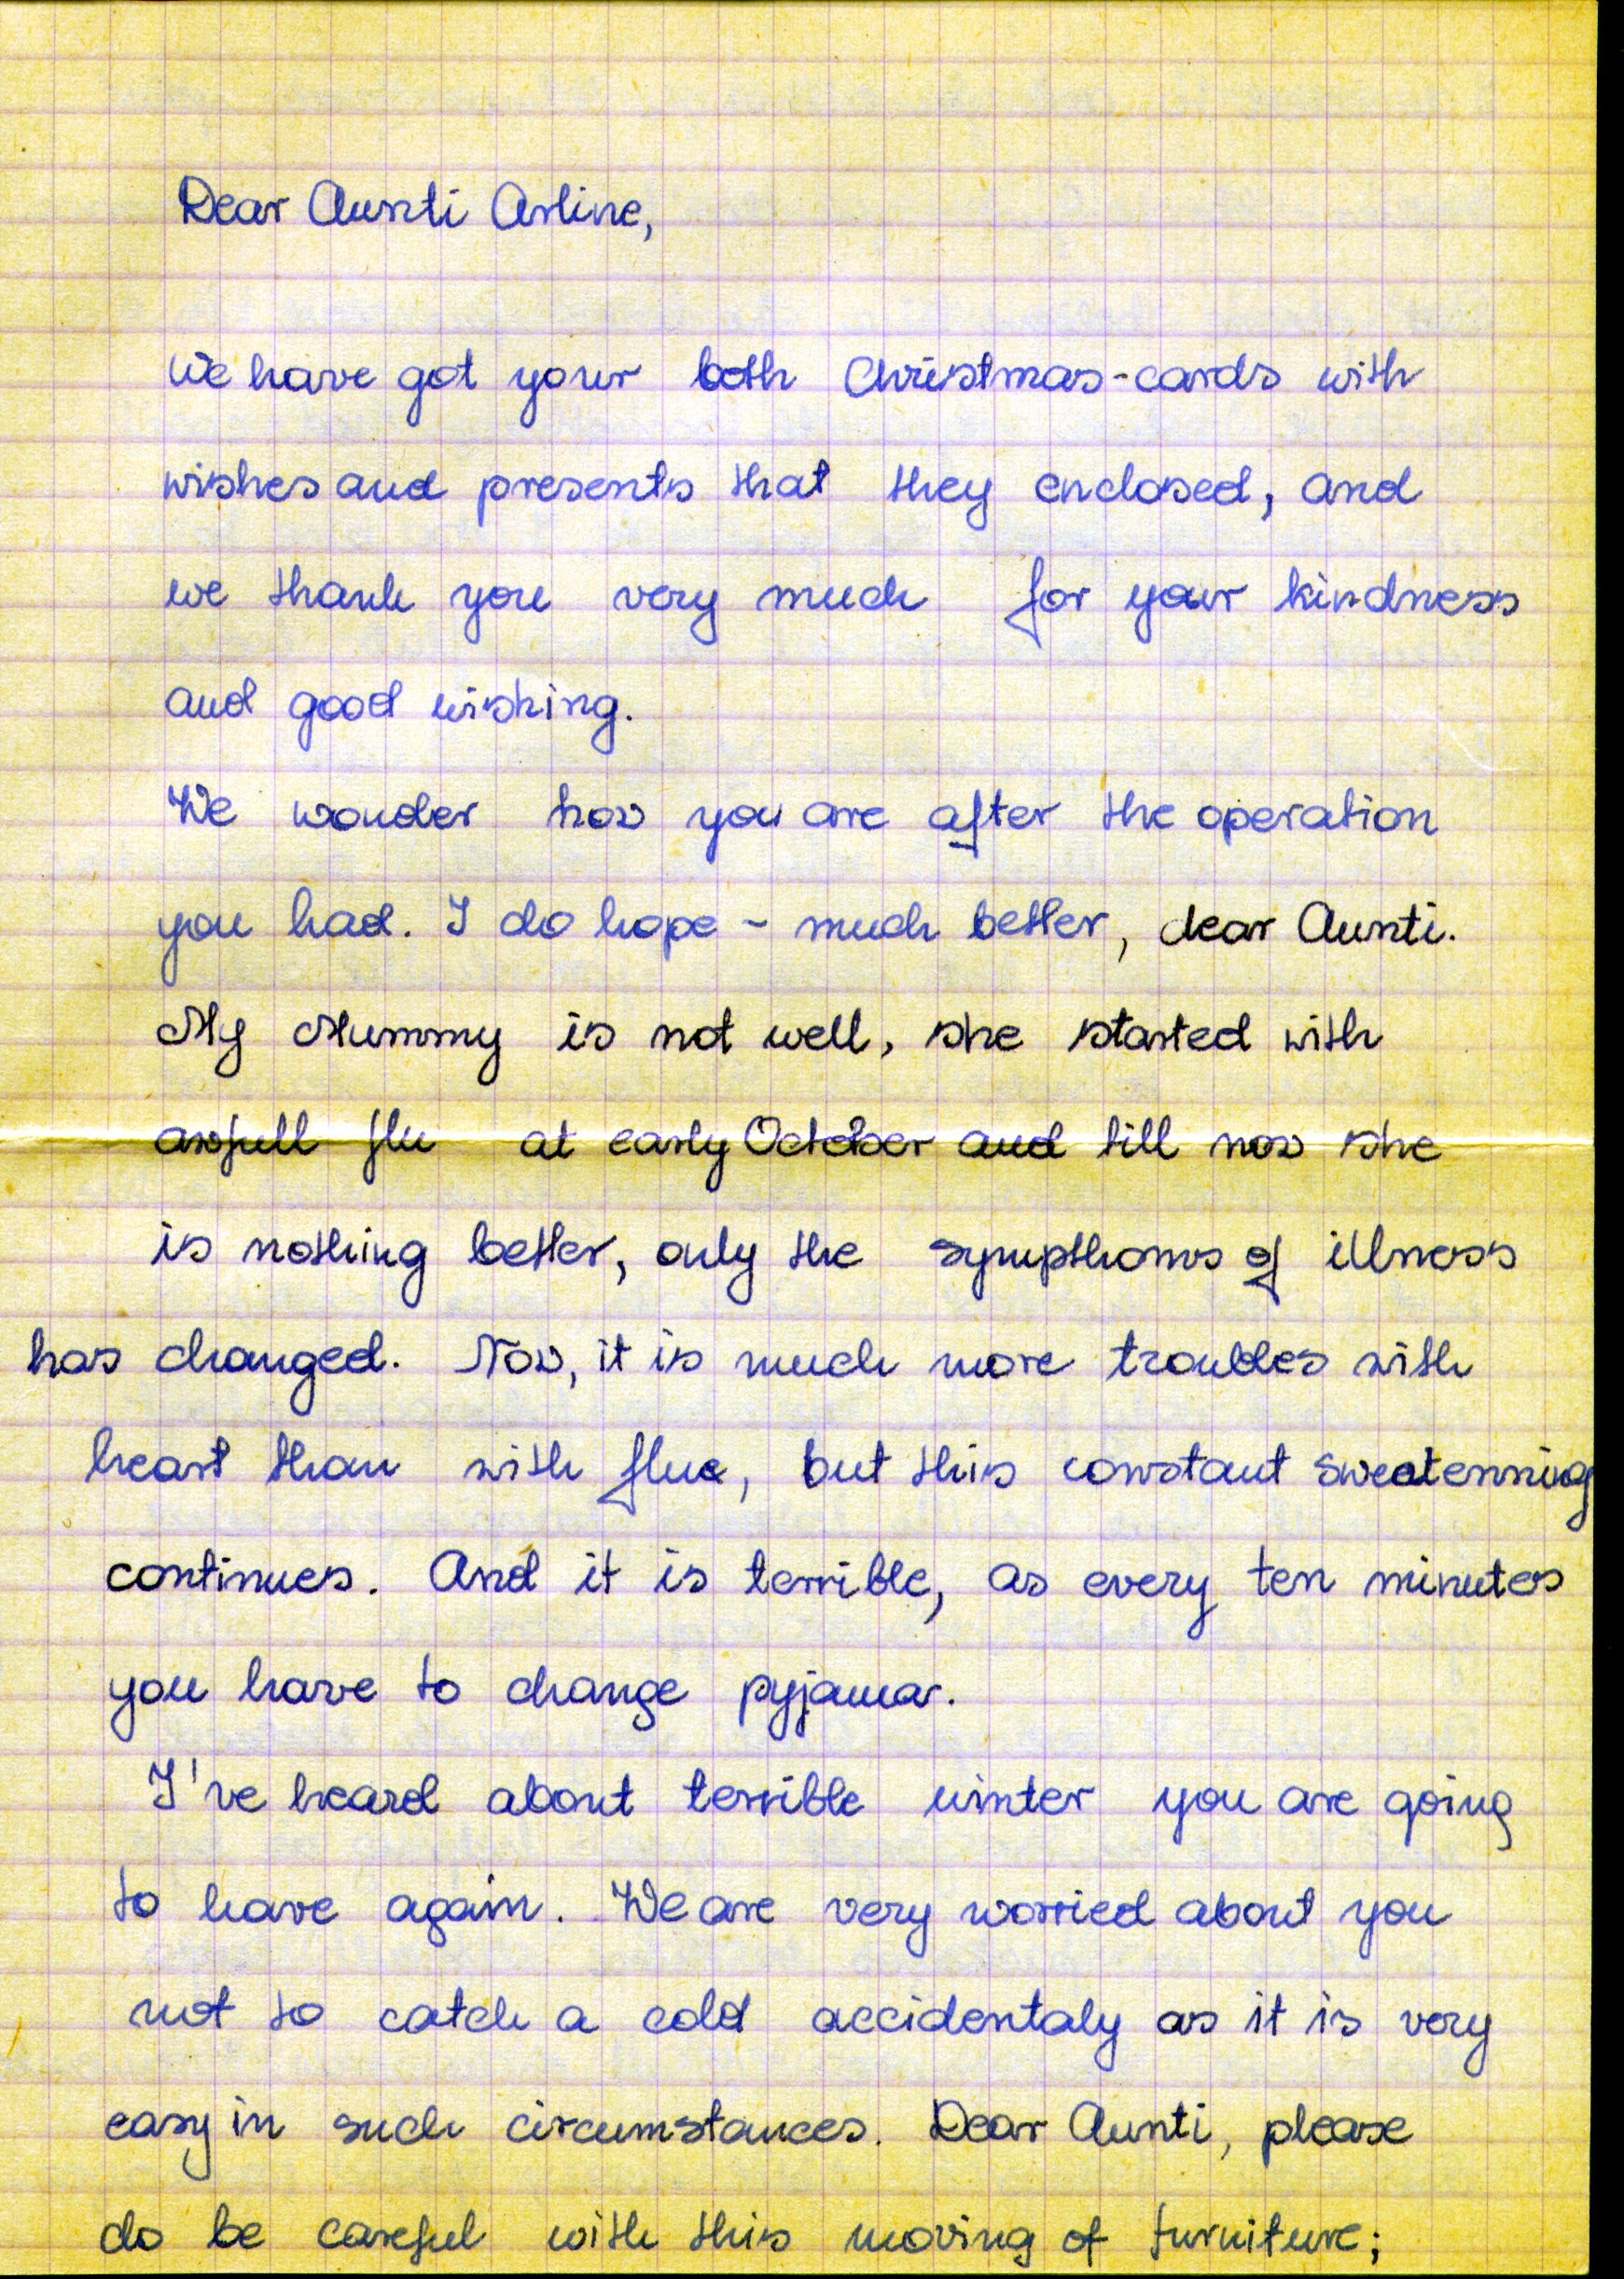 Barbara Karaszewska - Letter from Poland _page 1_ January 1978.jpg